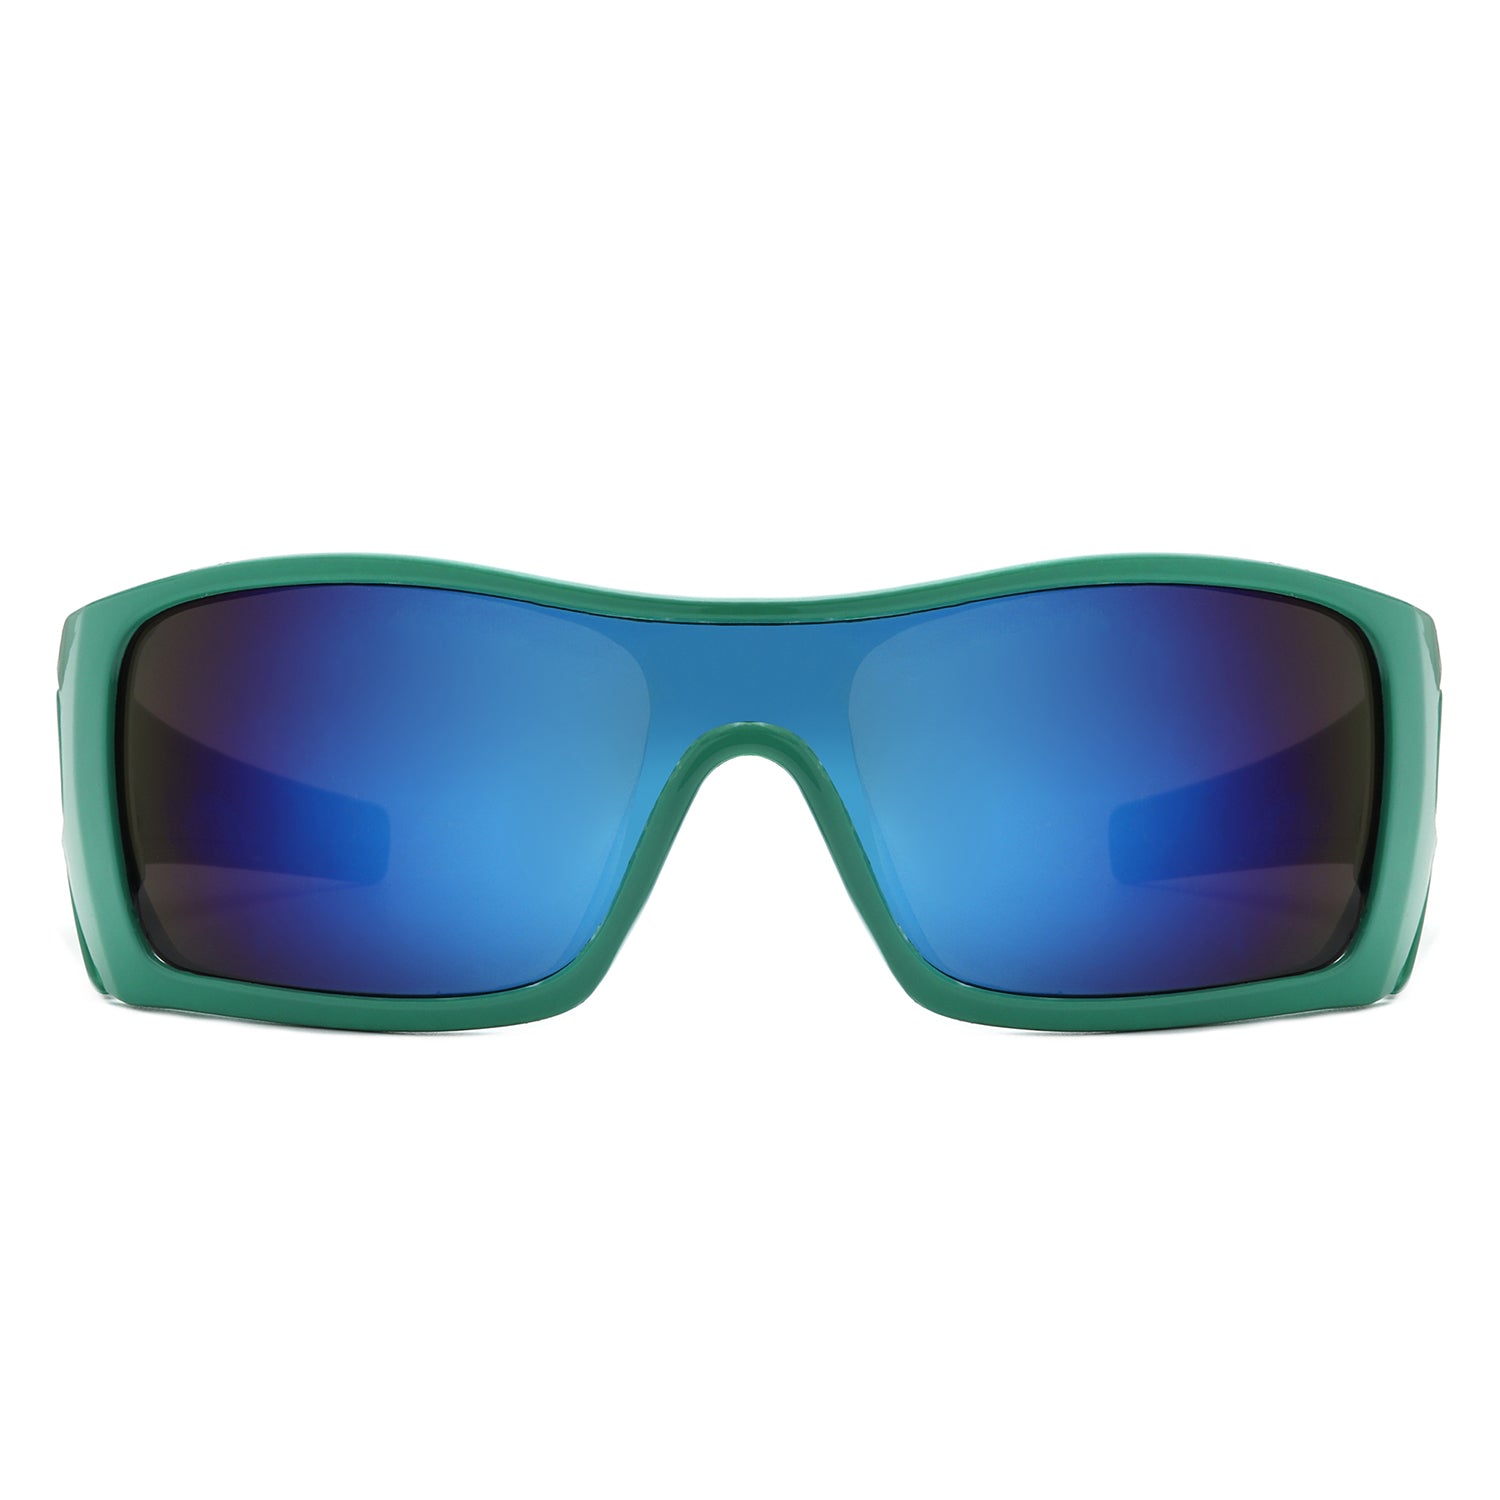 HS1257 - Rectangular Sport Wrap Around Square Wholesale Sunglasses